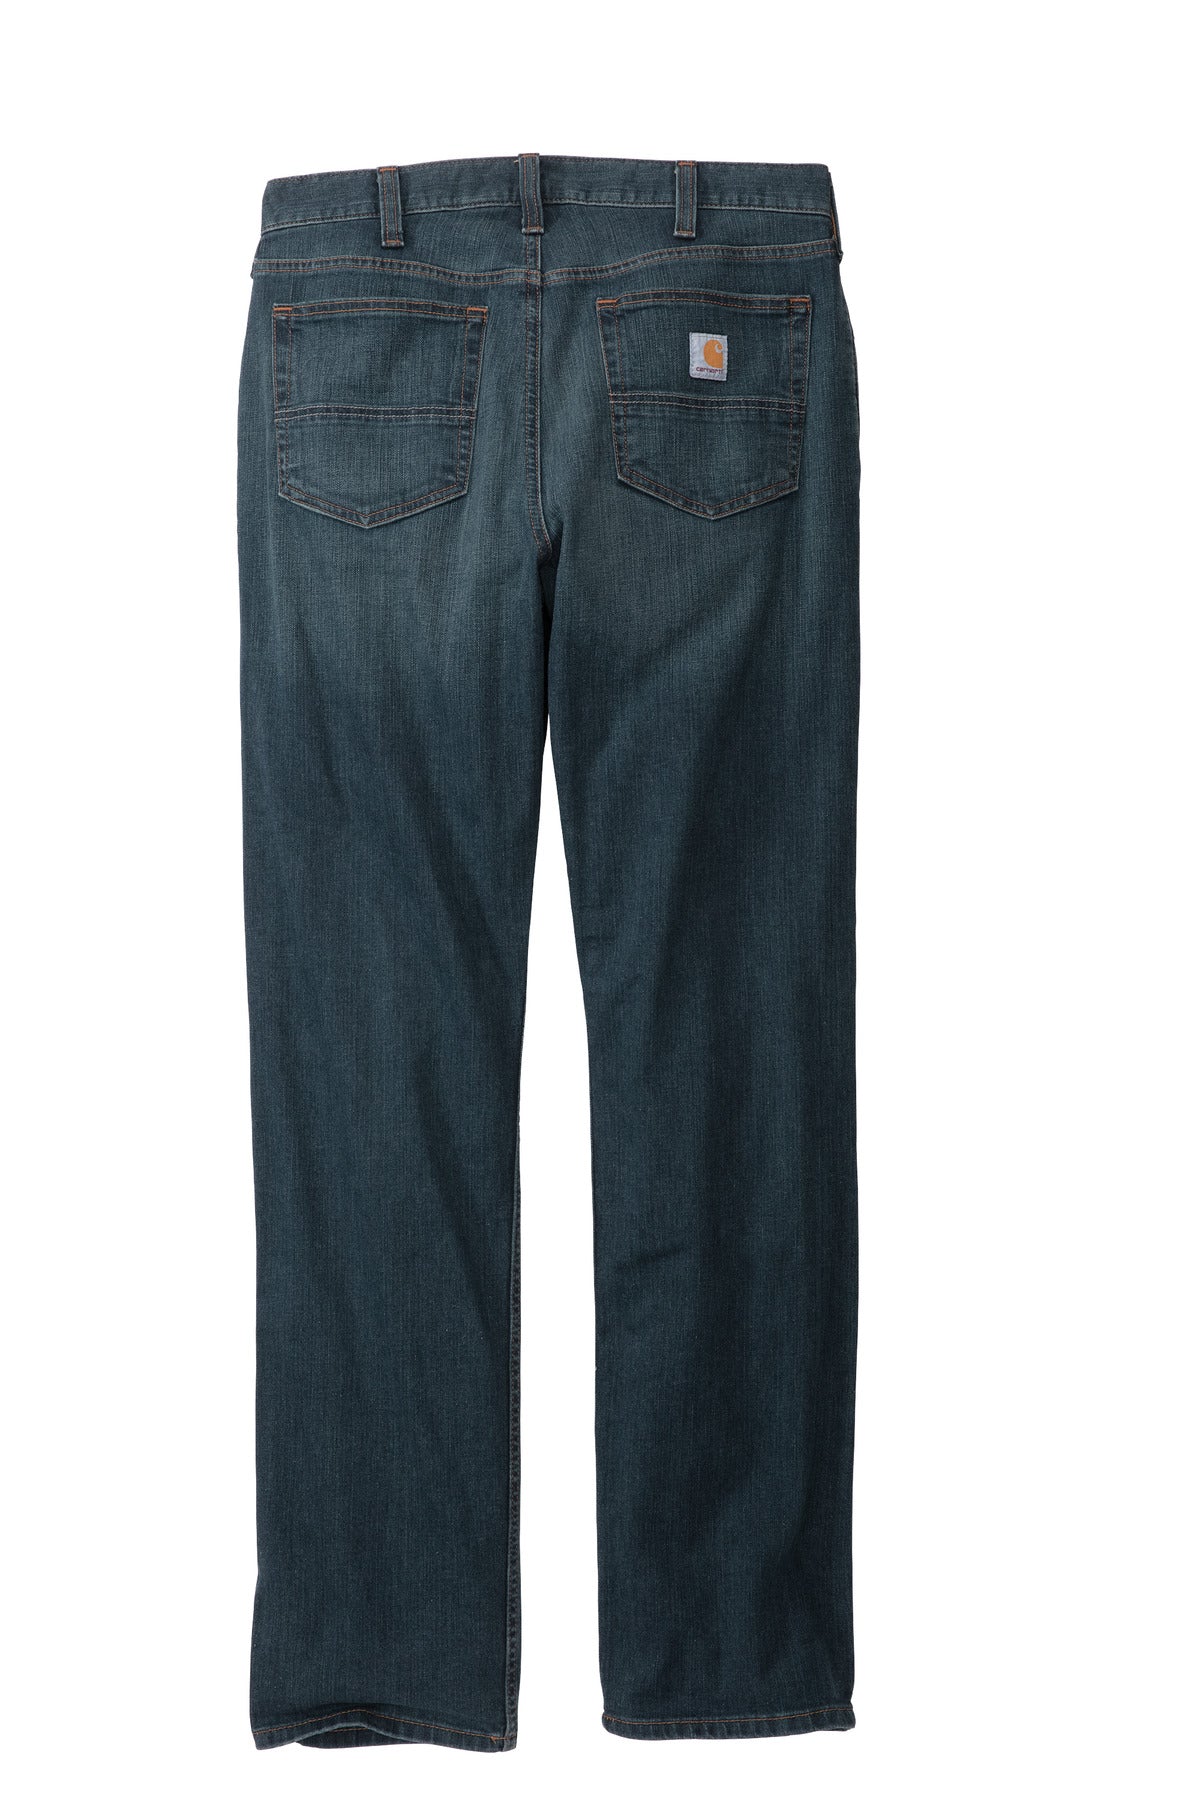 Carhartt Rugged Flex 5-Pocket Jean CT102804